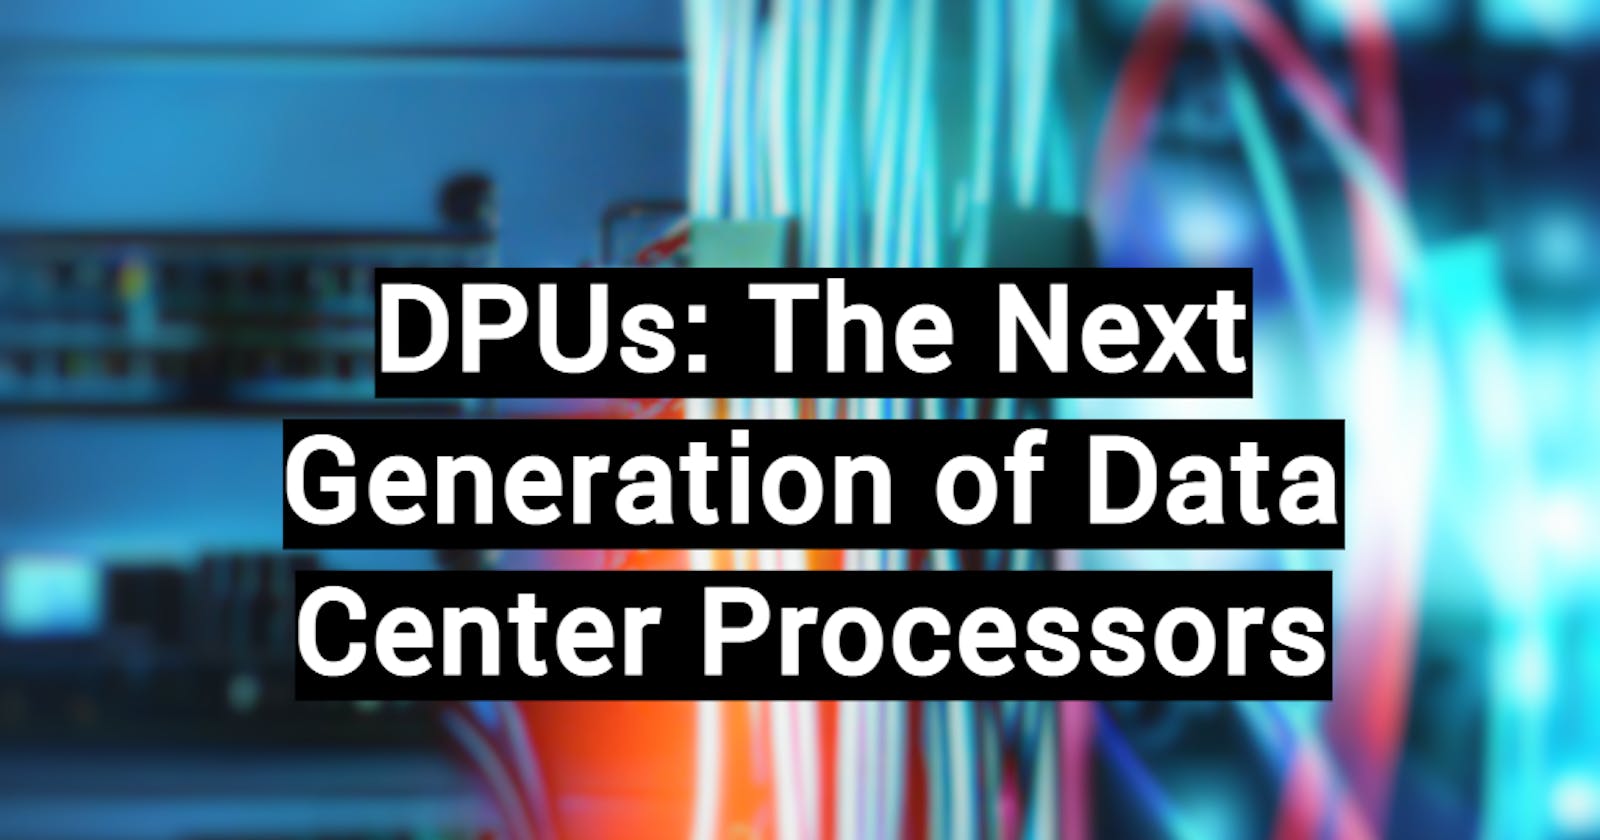 DPUs: The Next Generation of Data Center Processors